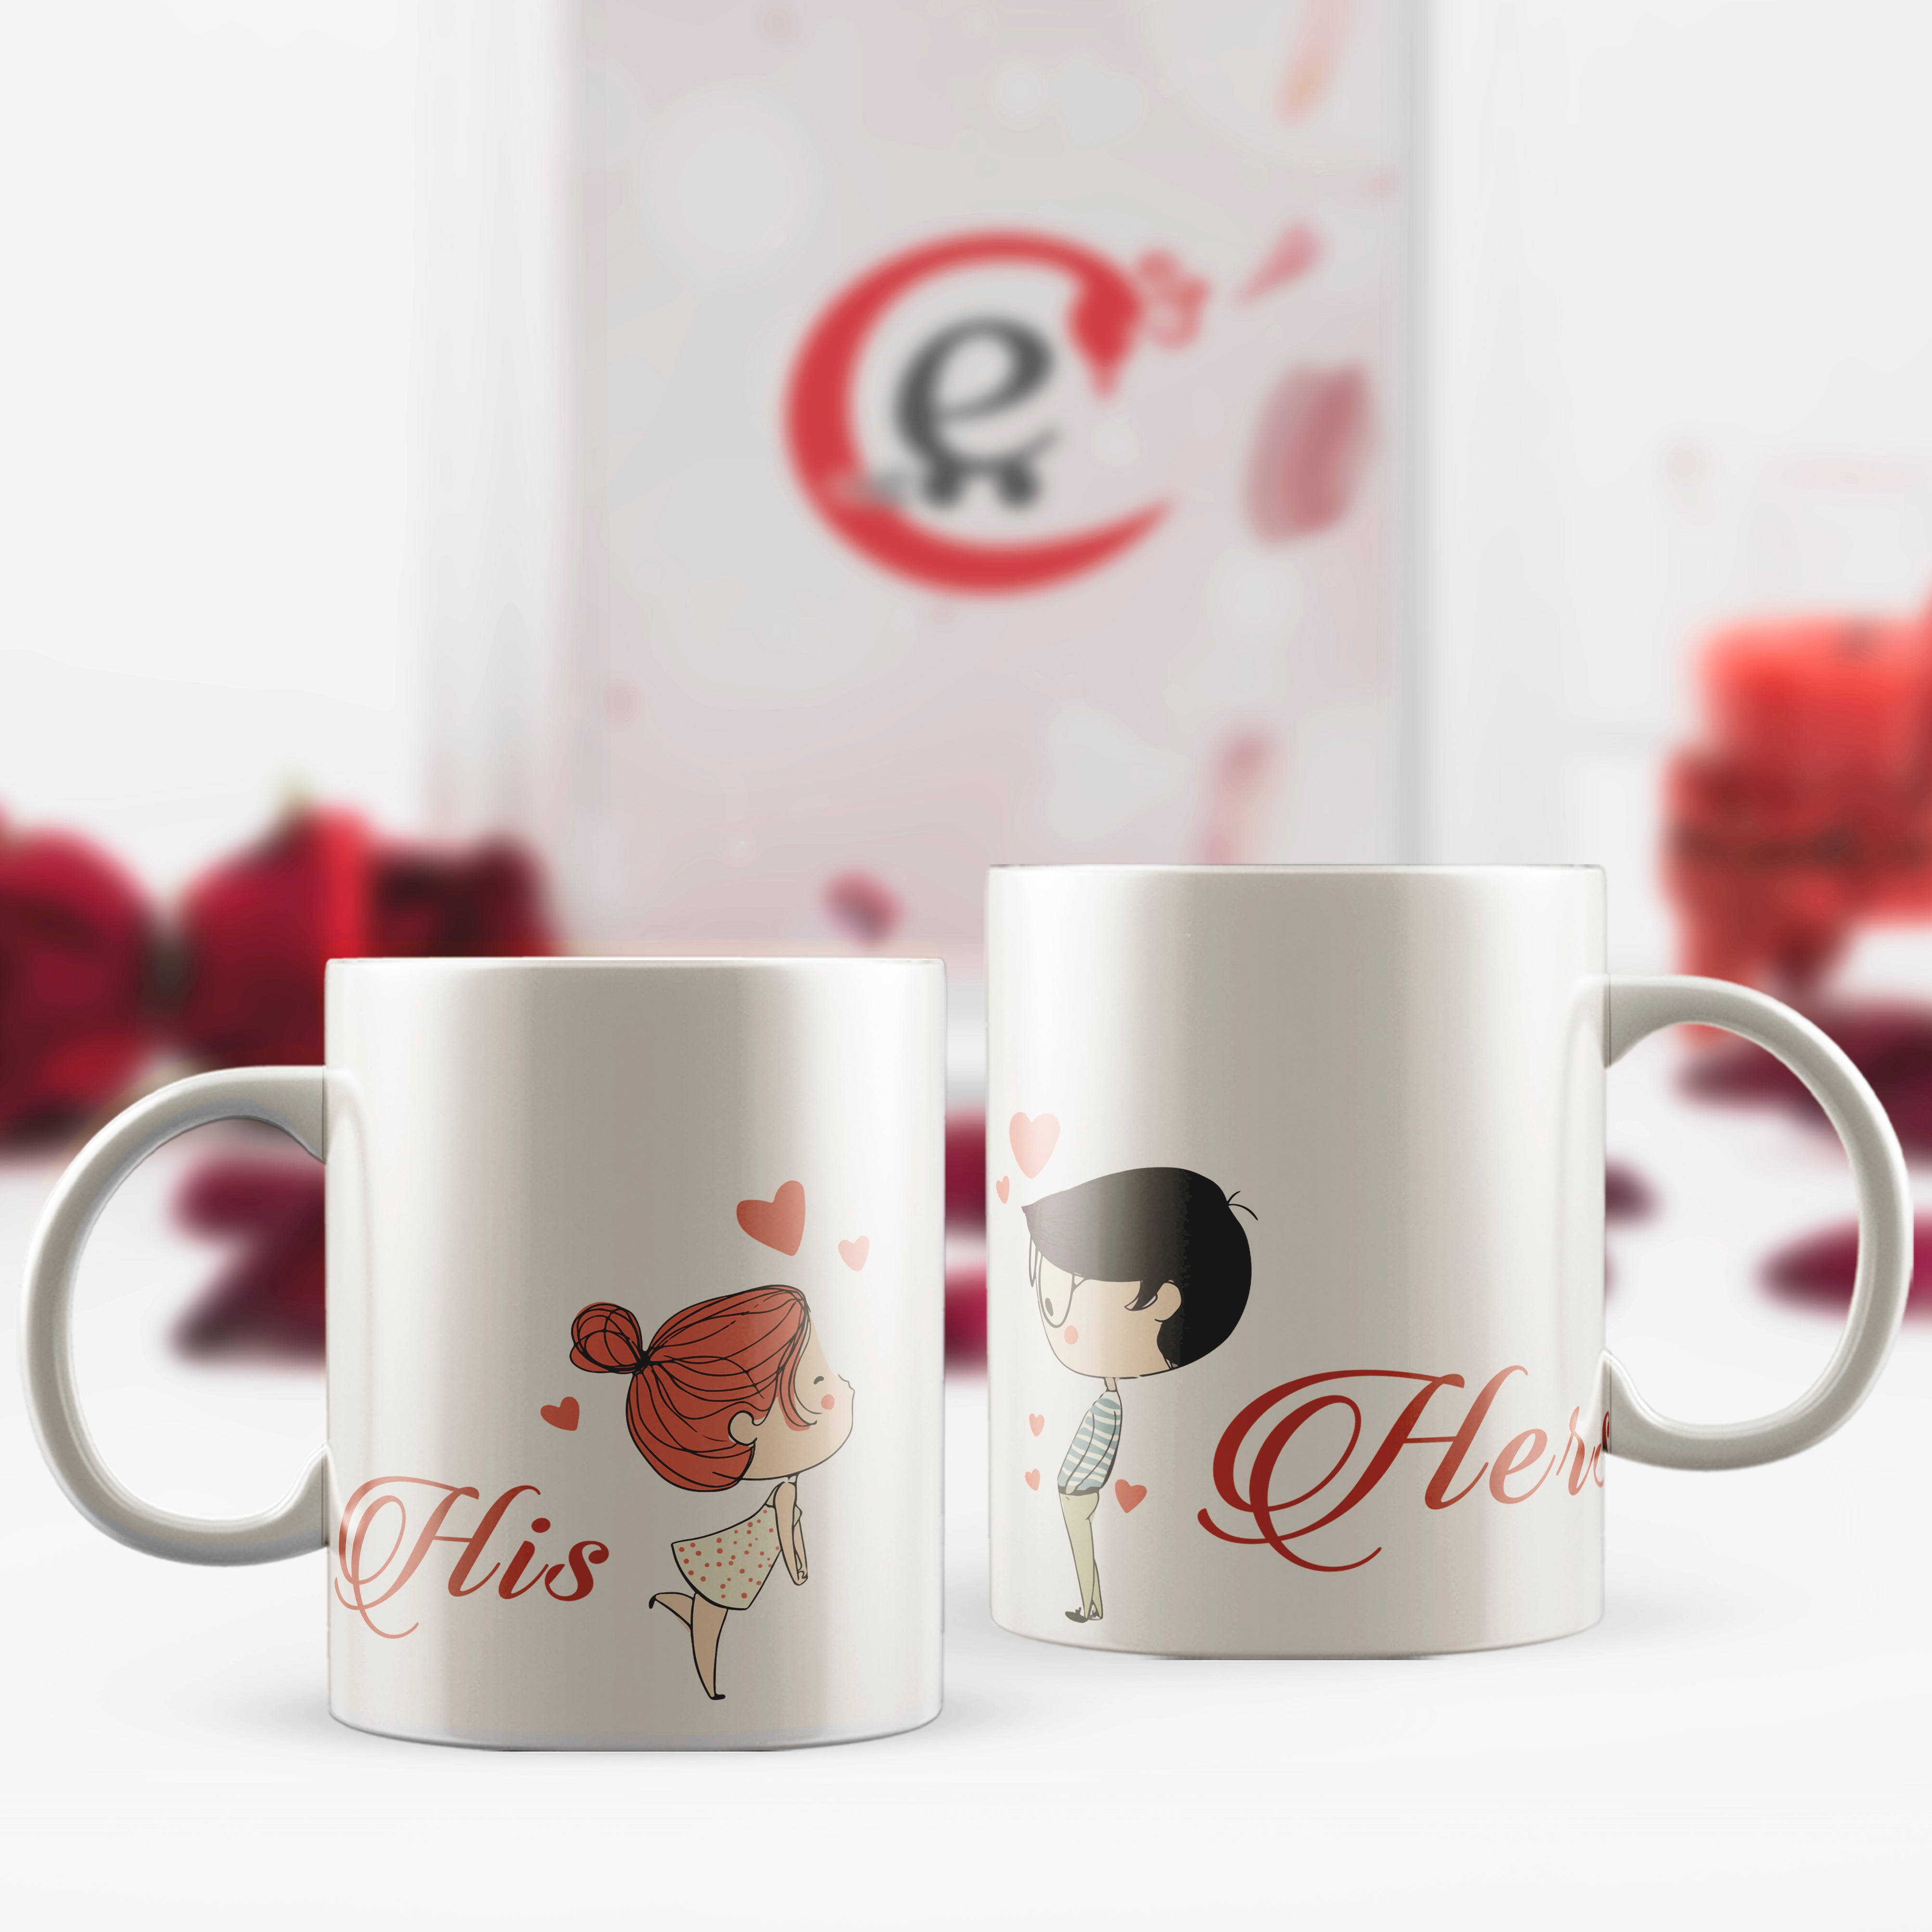 Set of 2 "His - Her" Valentine Love theme Ceramic Coffee Mugs